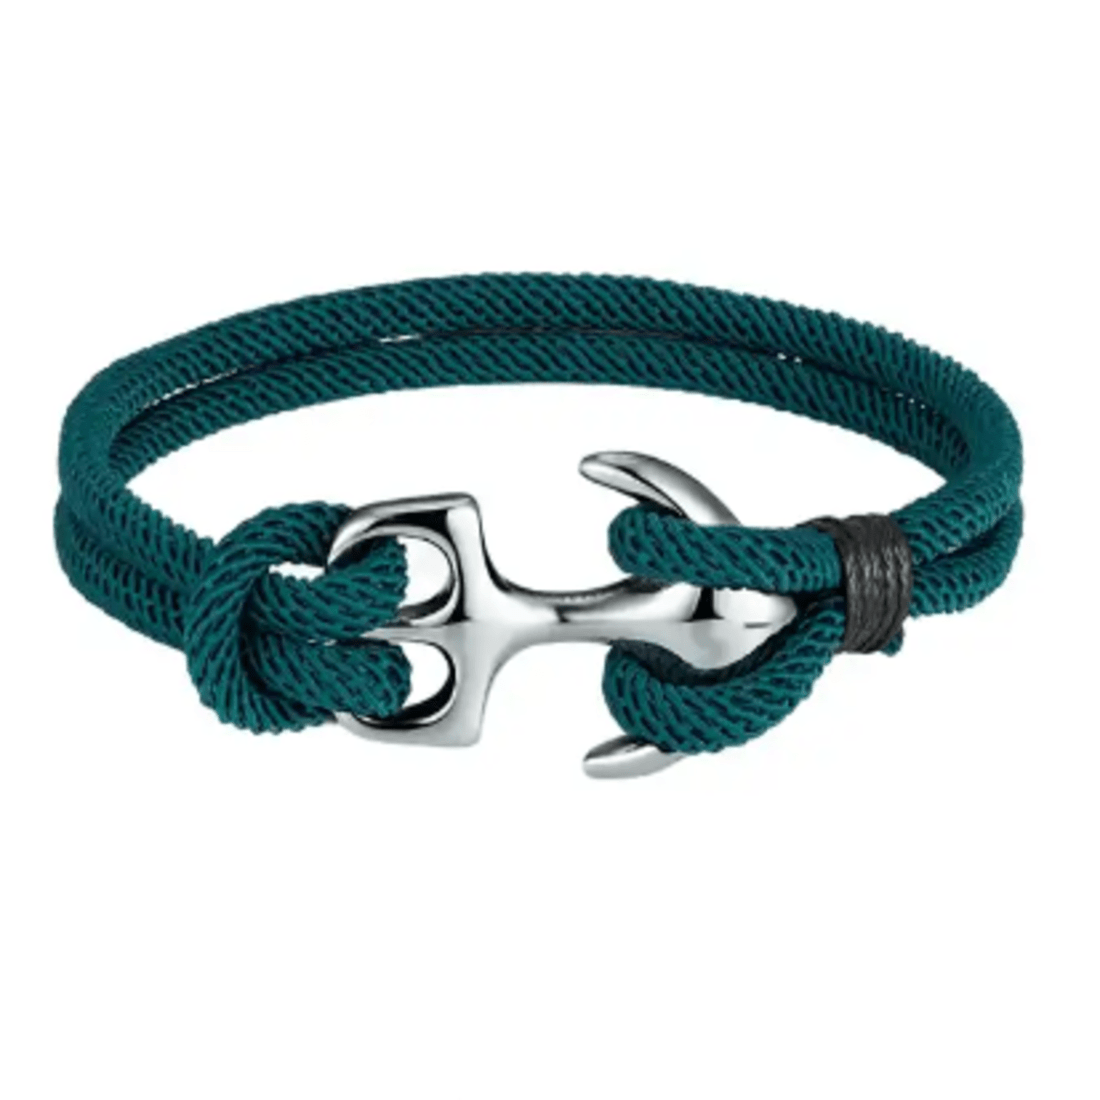 Brazalete de Cuerda con Broche de Titanio Verde x 21cm